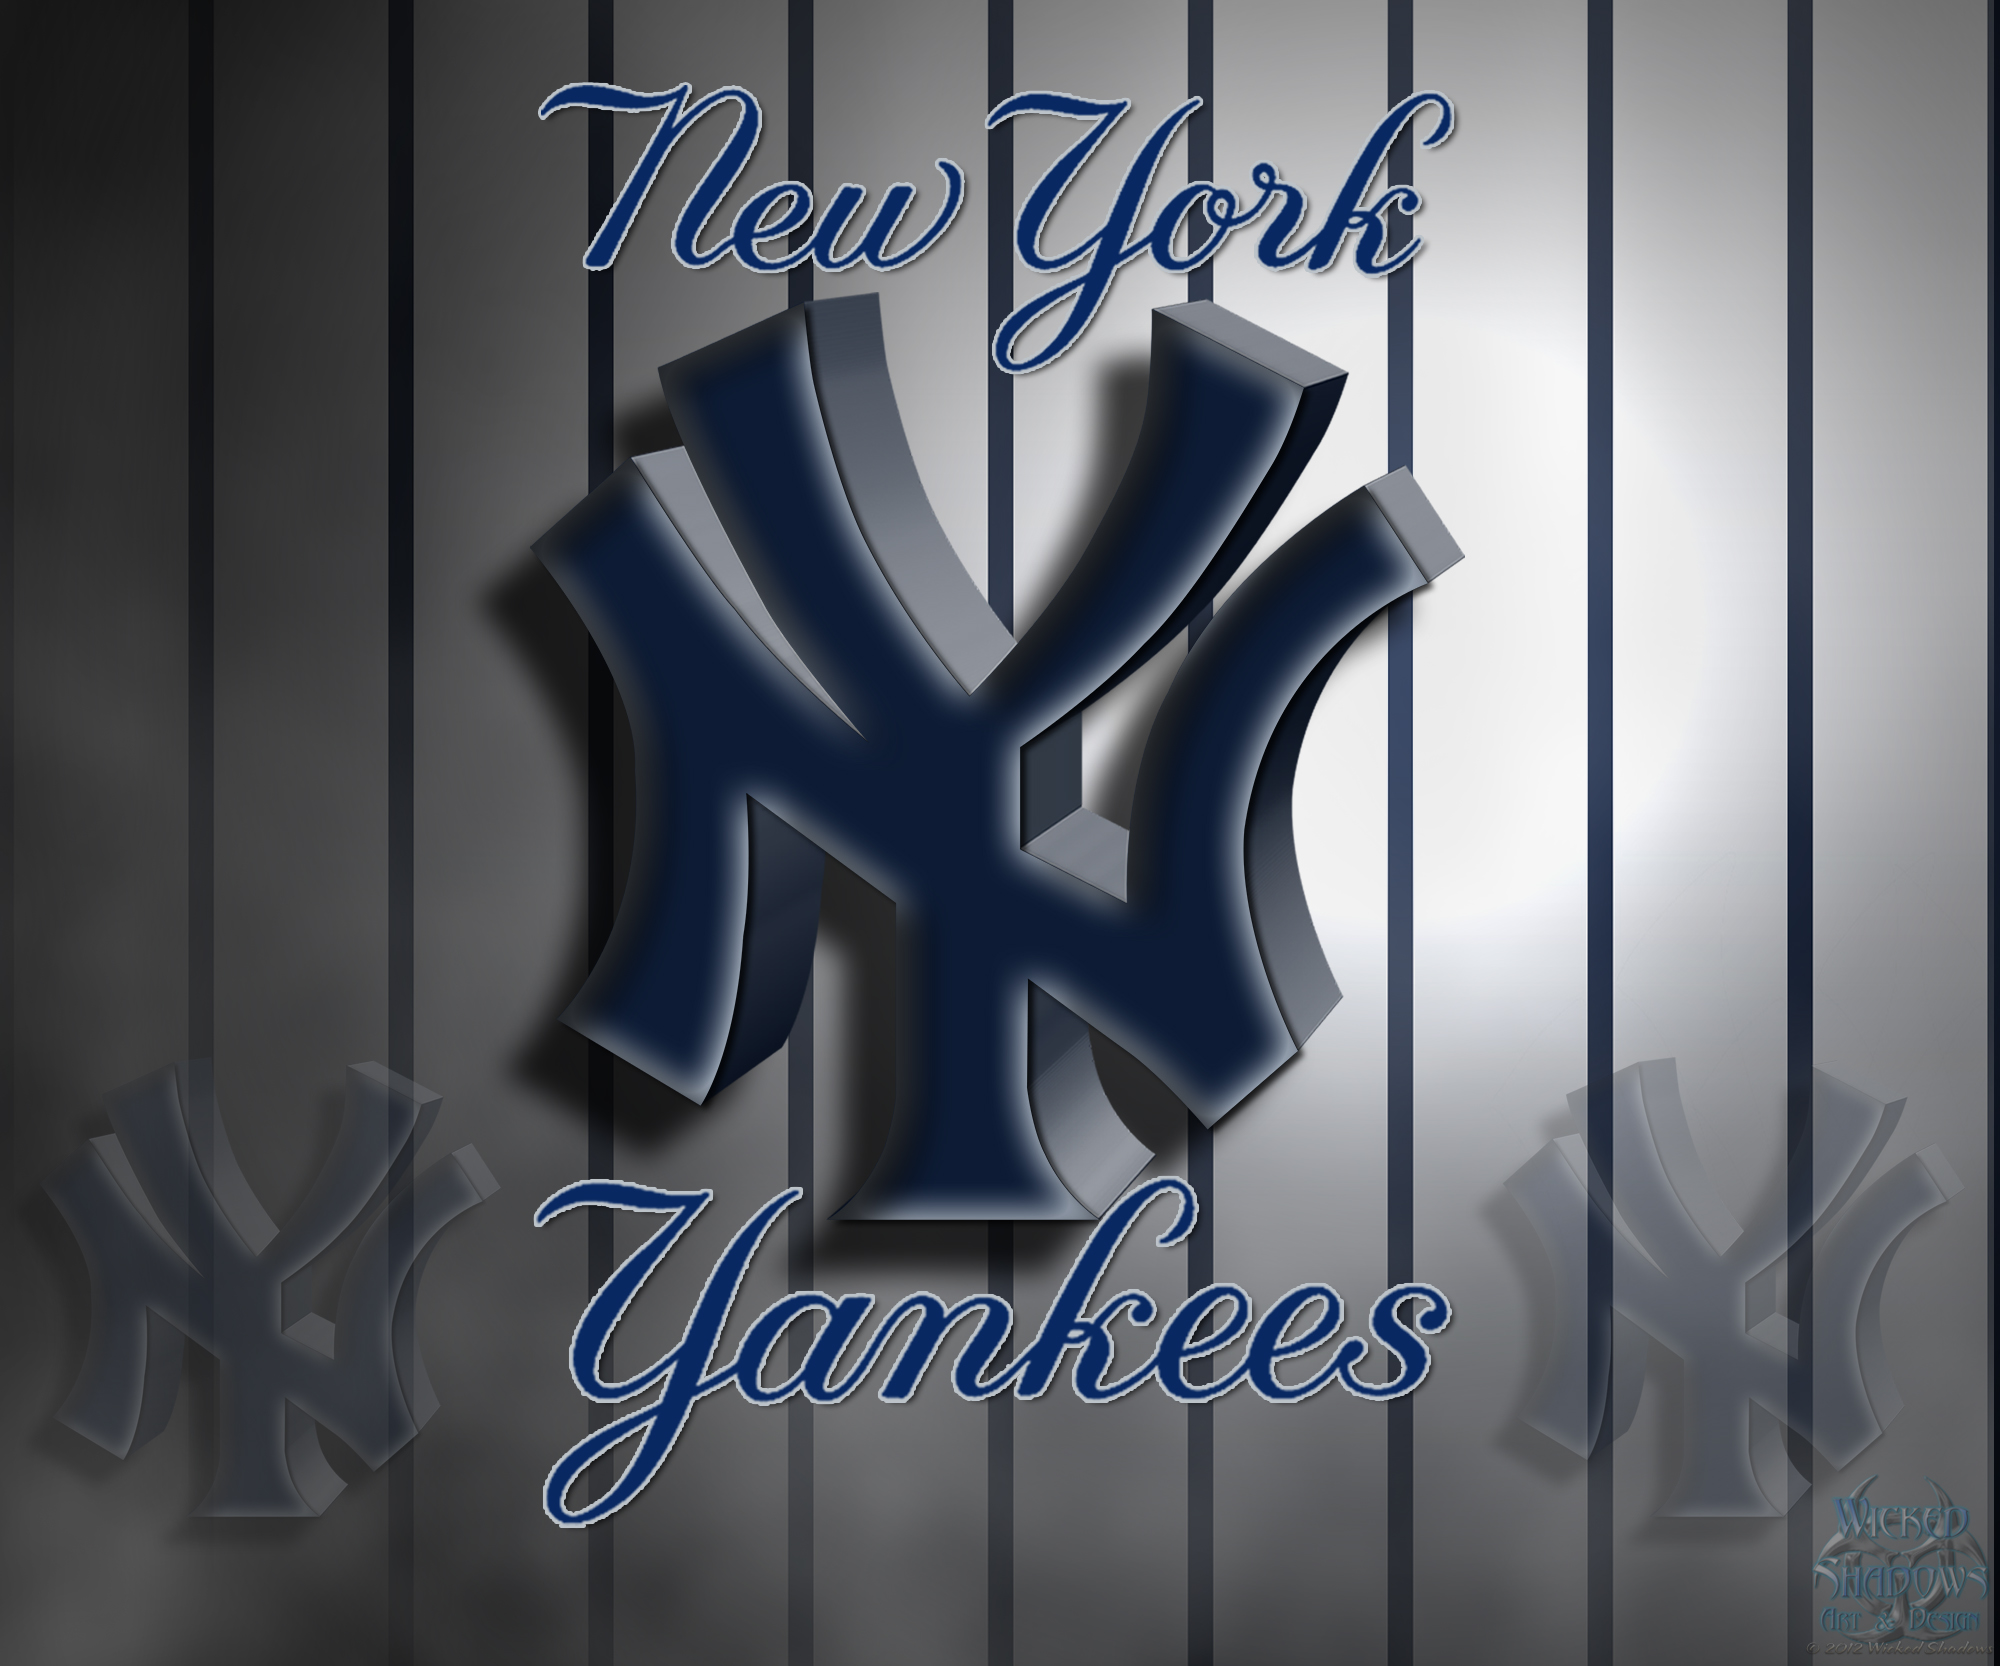 Yankees symbol wallpaper | danasrec.top